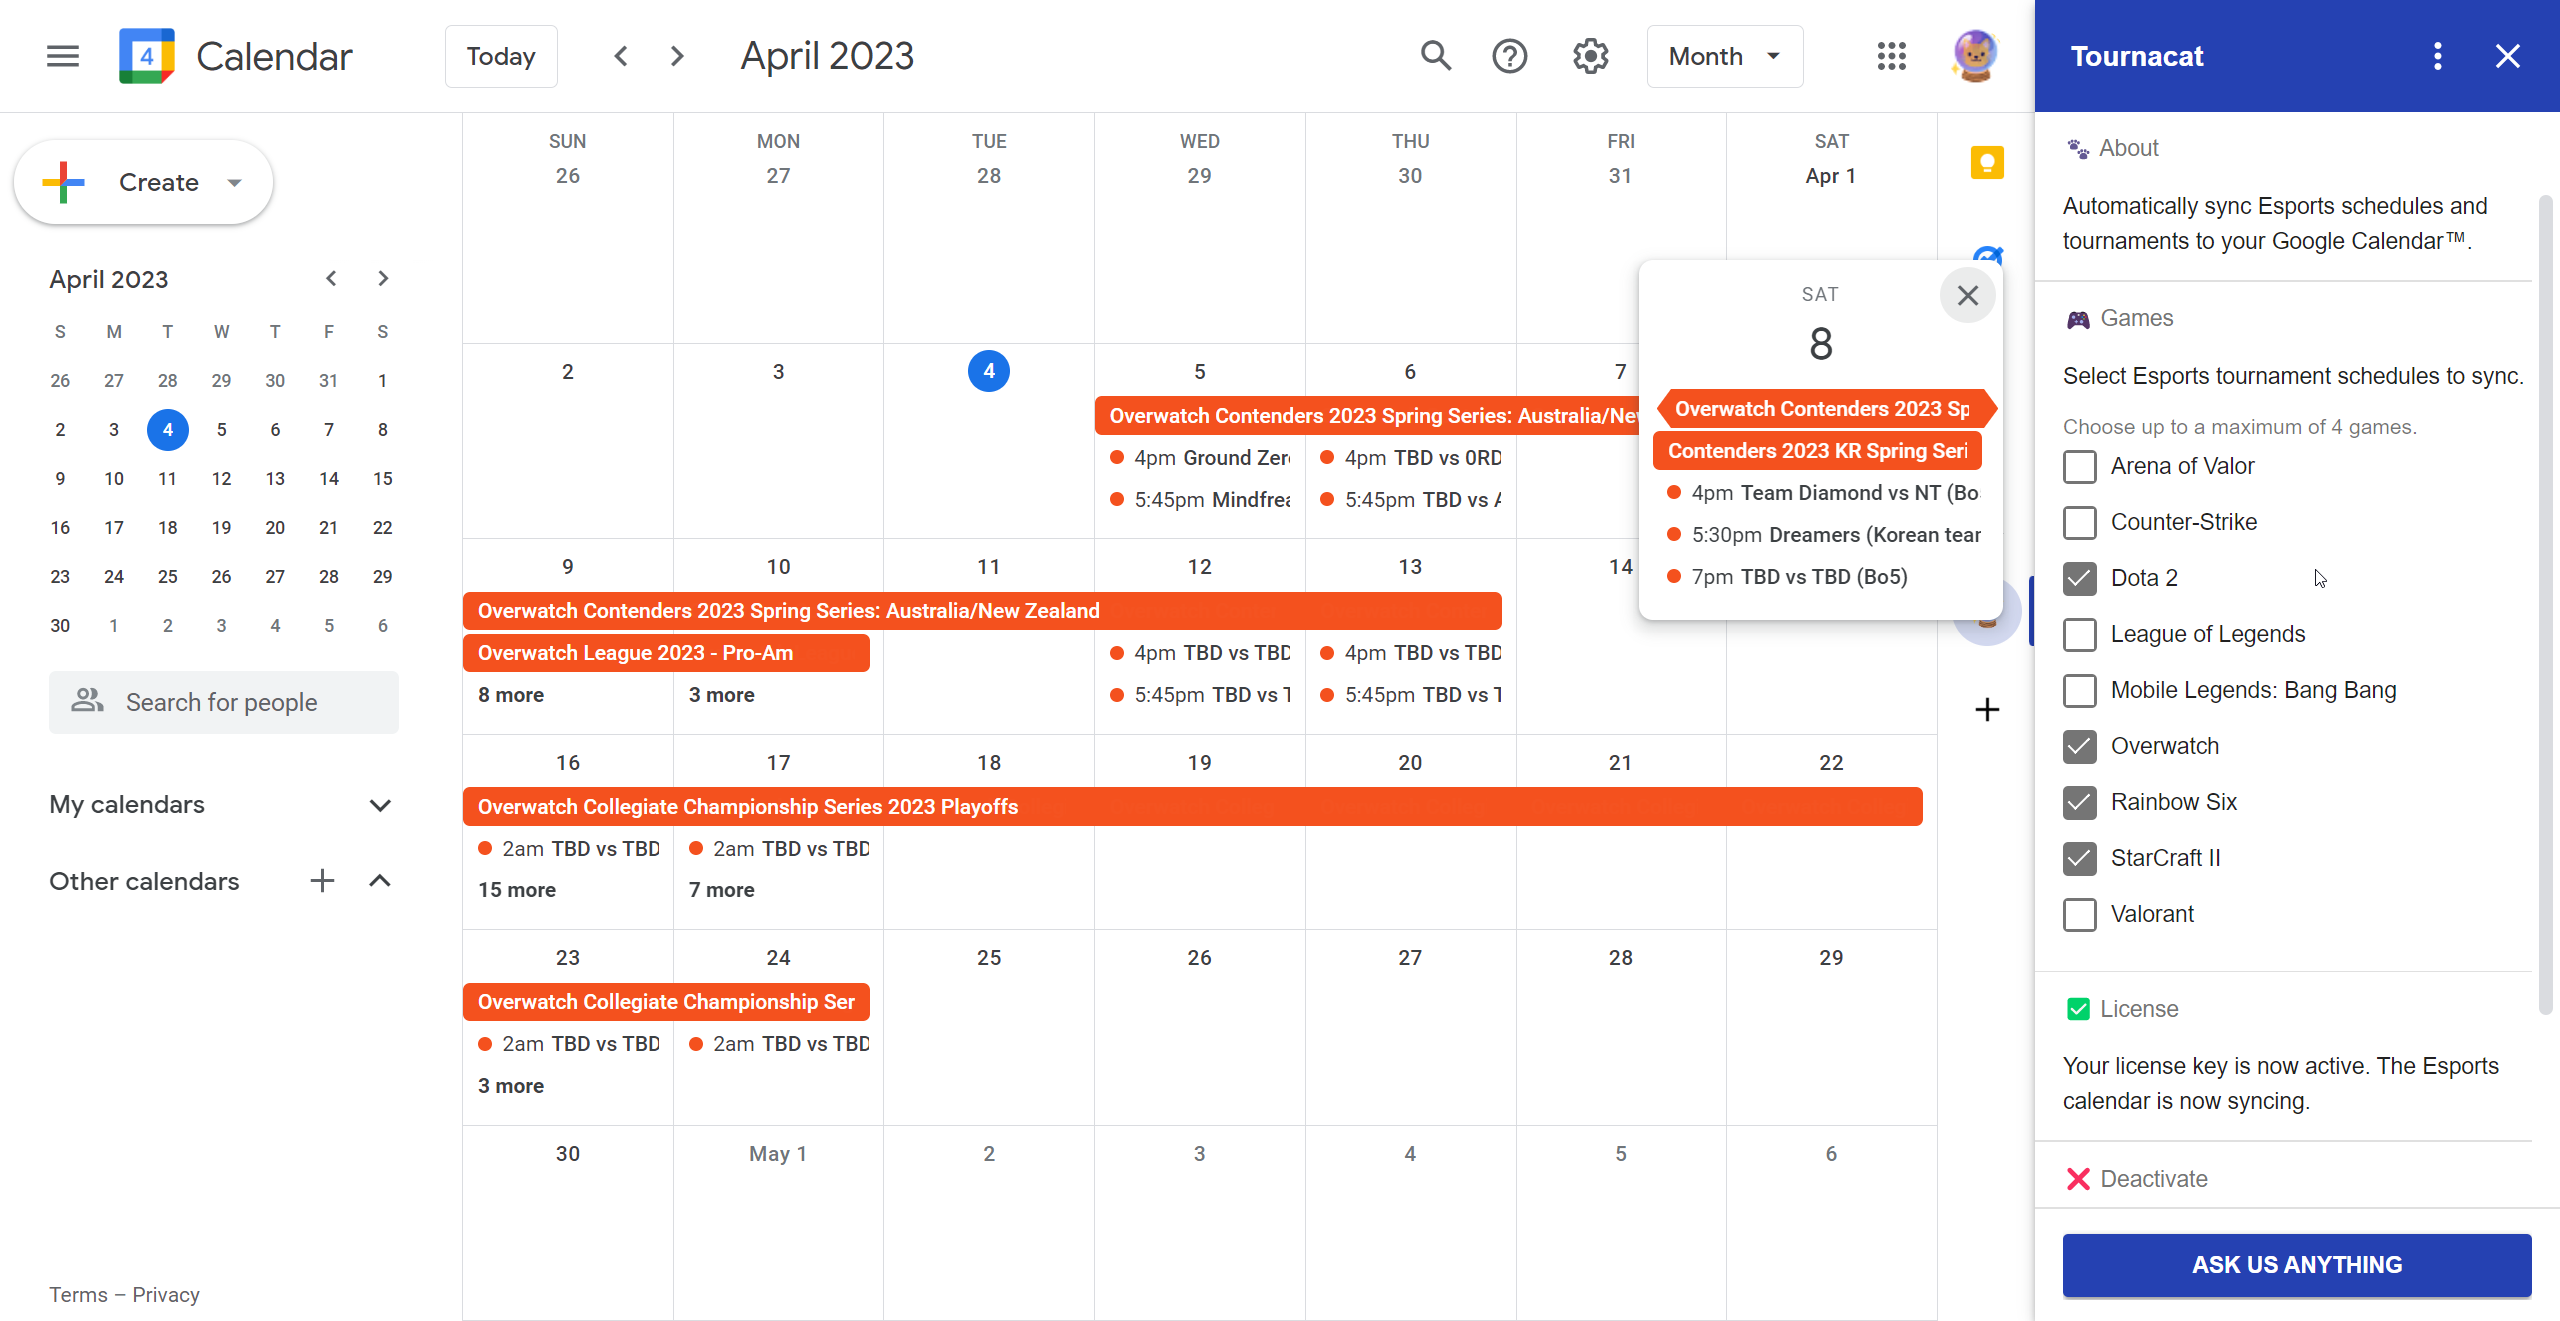 Overwatch League Schedule in Google Calendar